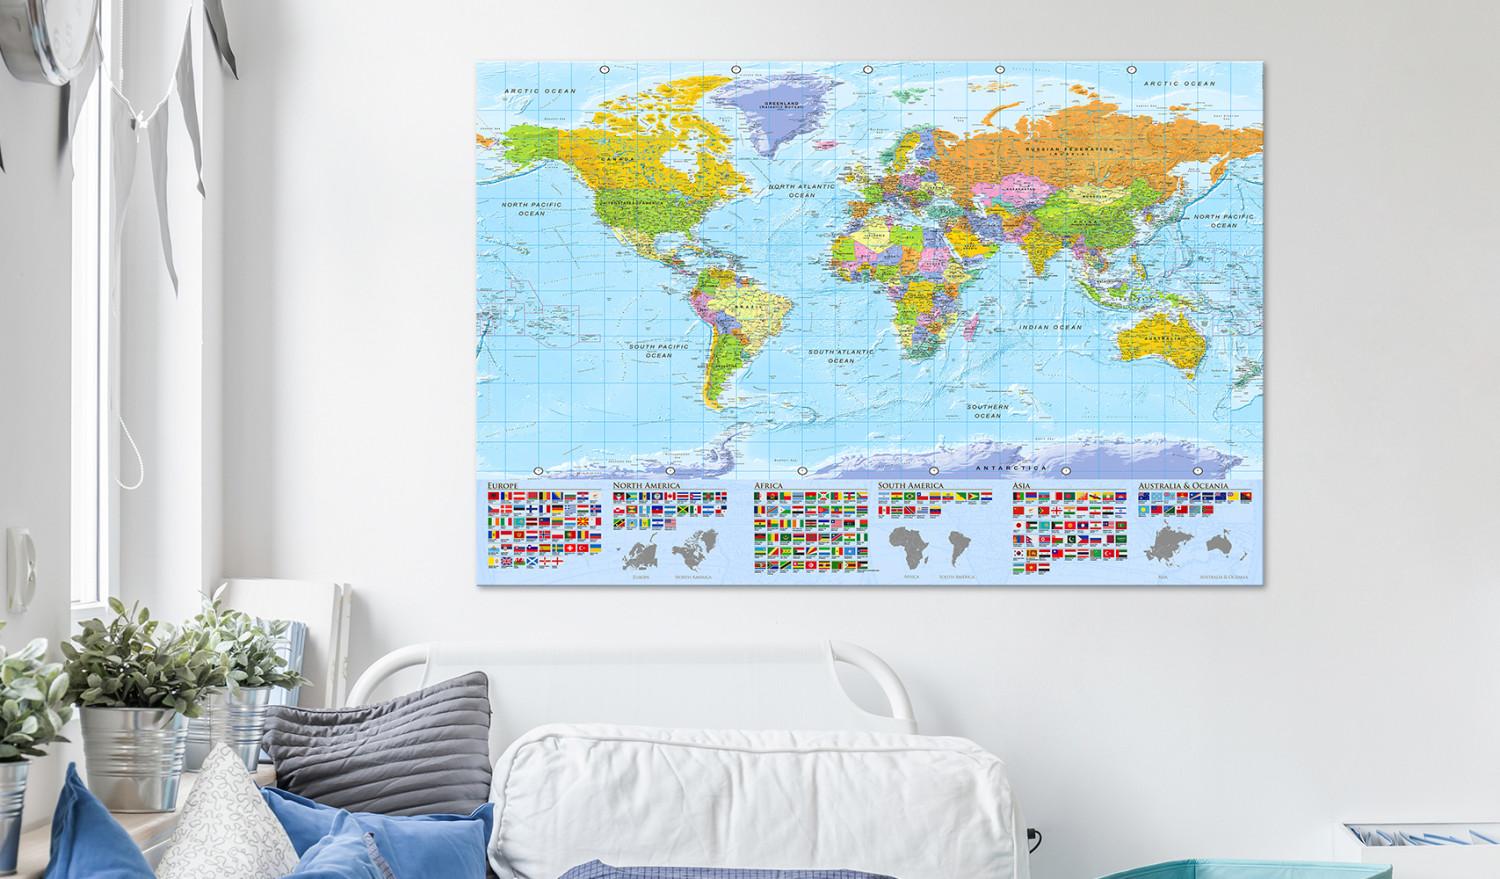 Decorative Pinboard World: Colourful Map [Cork Map]